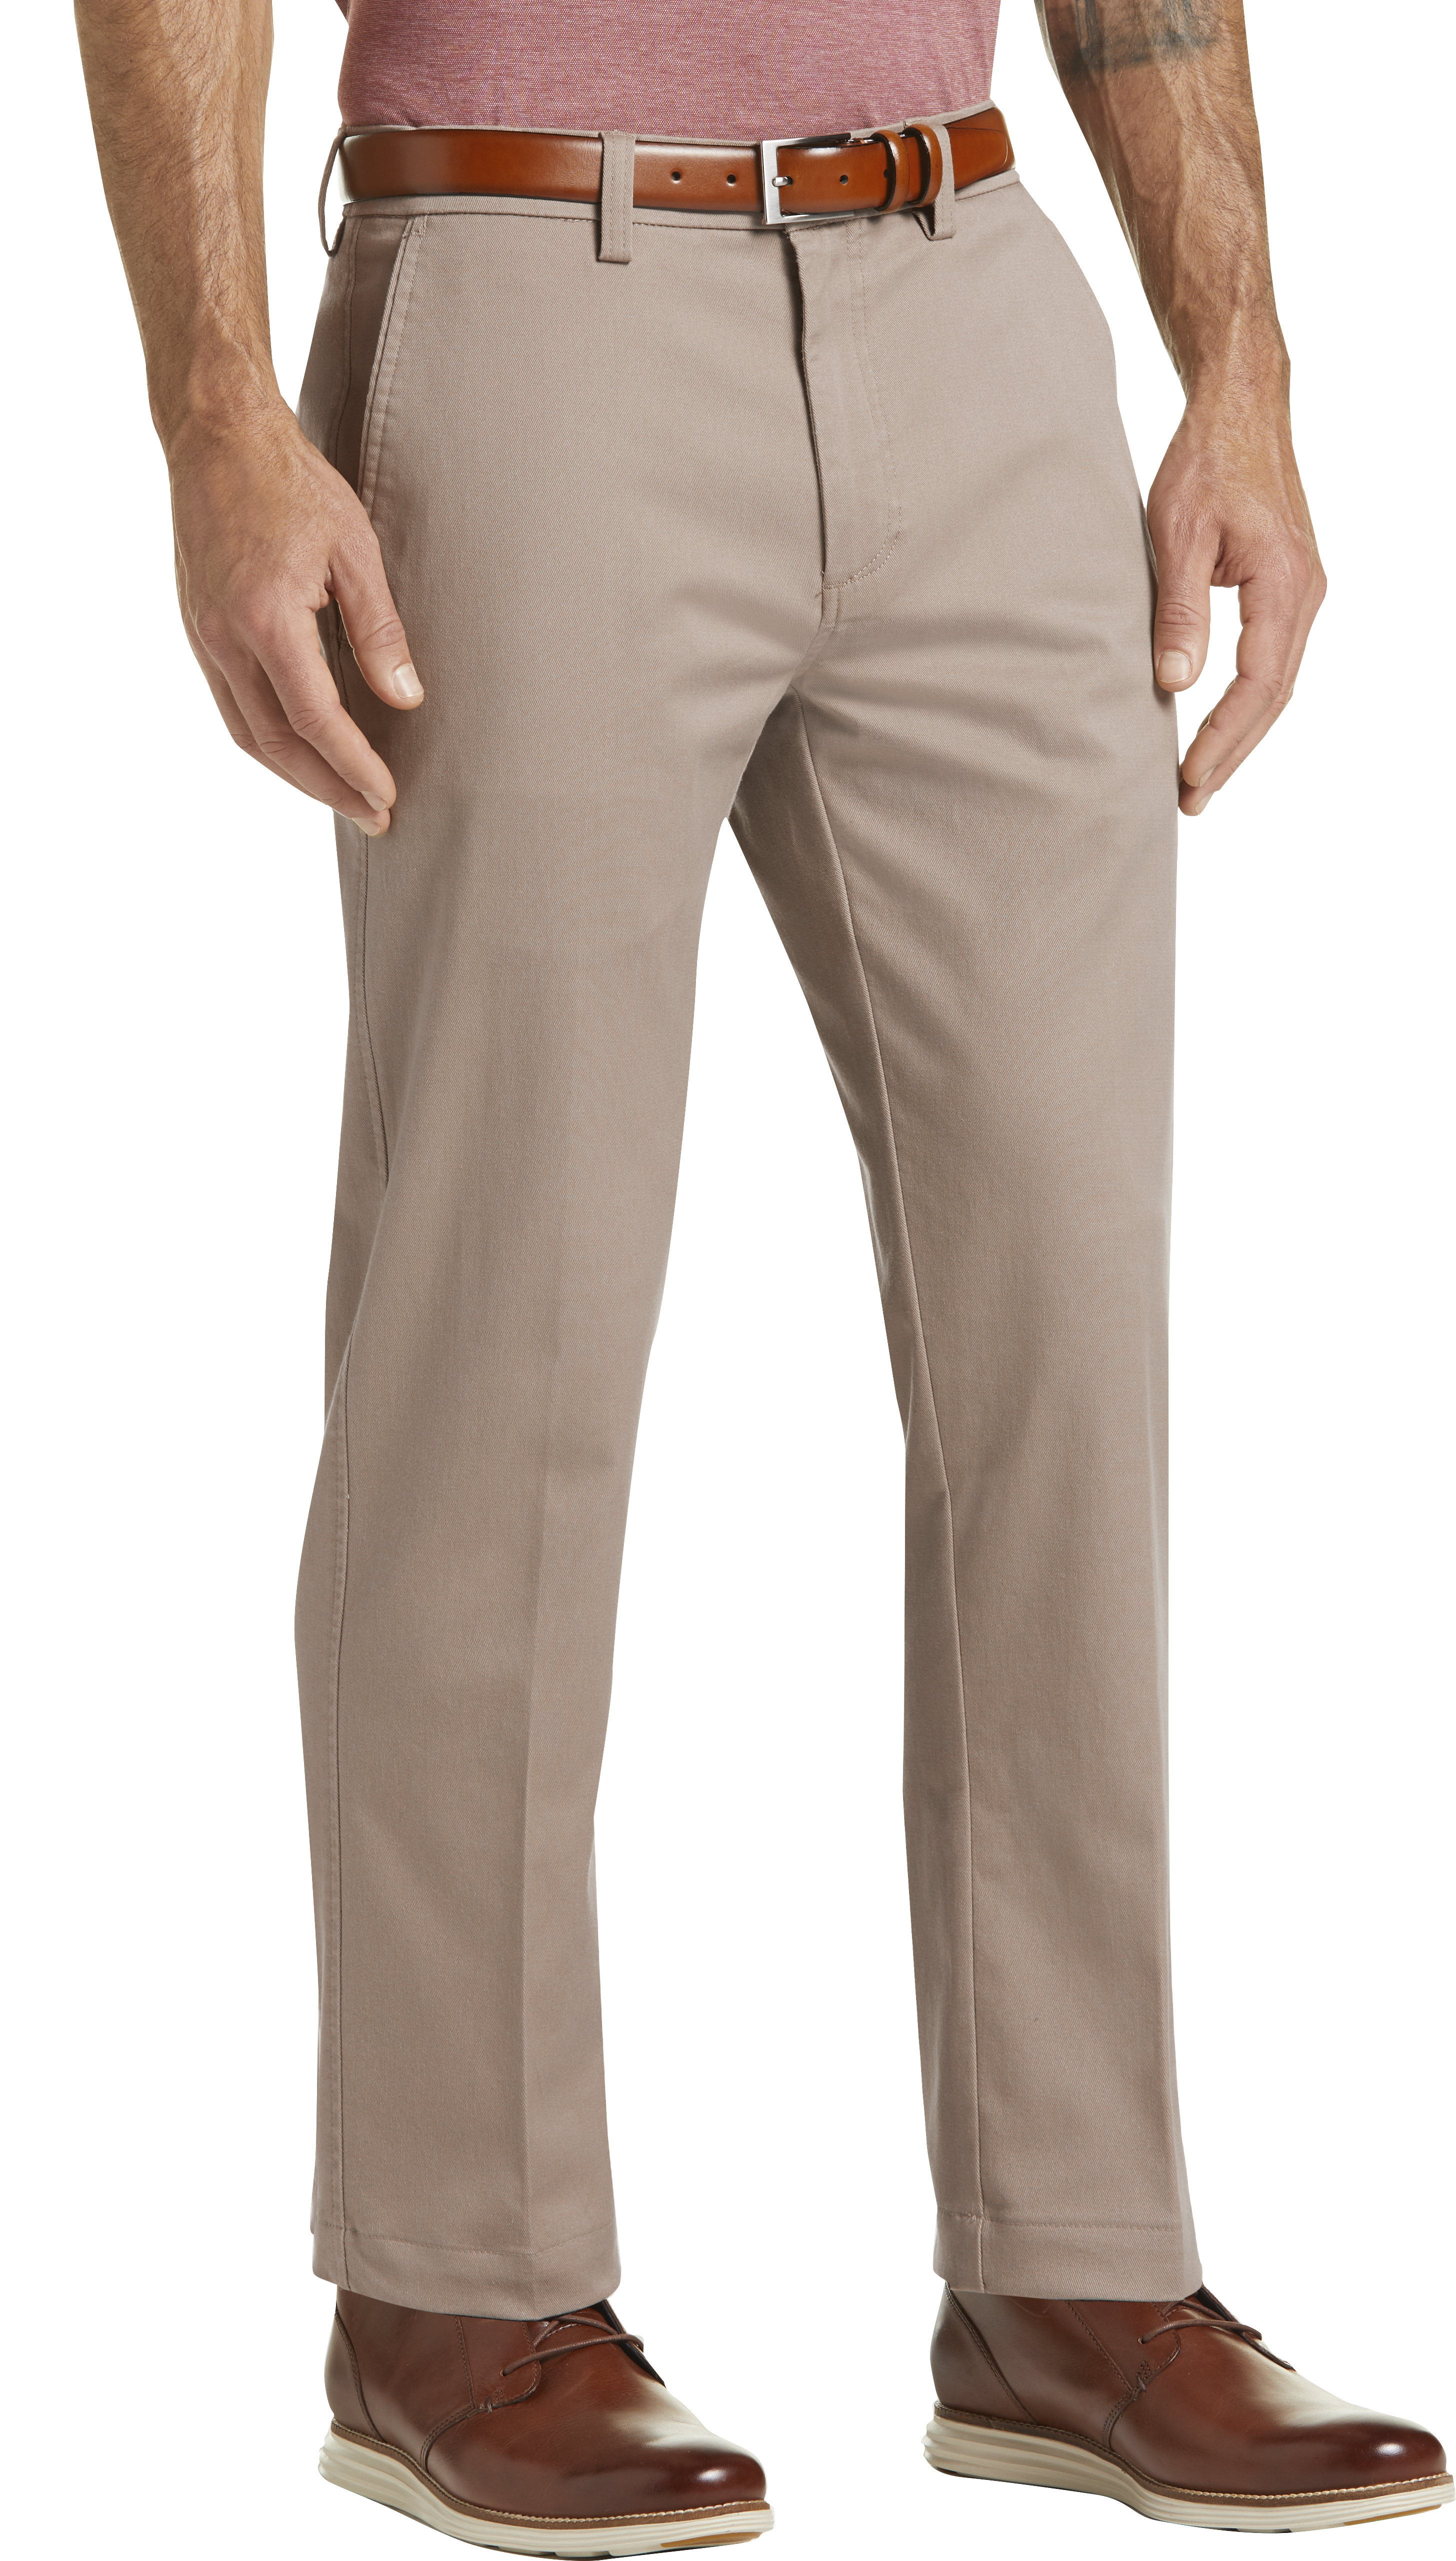 Bliver til Leonardoda fortryde Haggar Iron Free Premium Straight Fit Khaki Pants, Tan - Men's Pants |  Men's Wearhouse